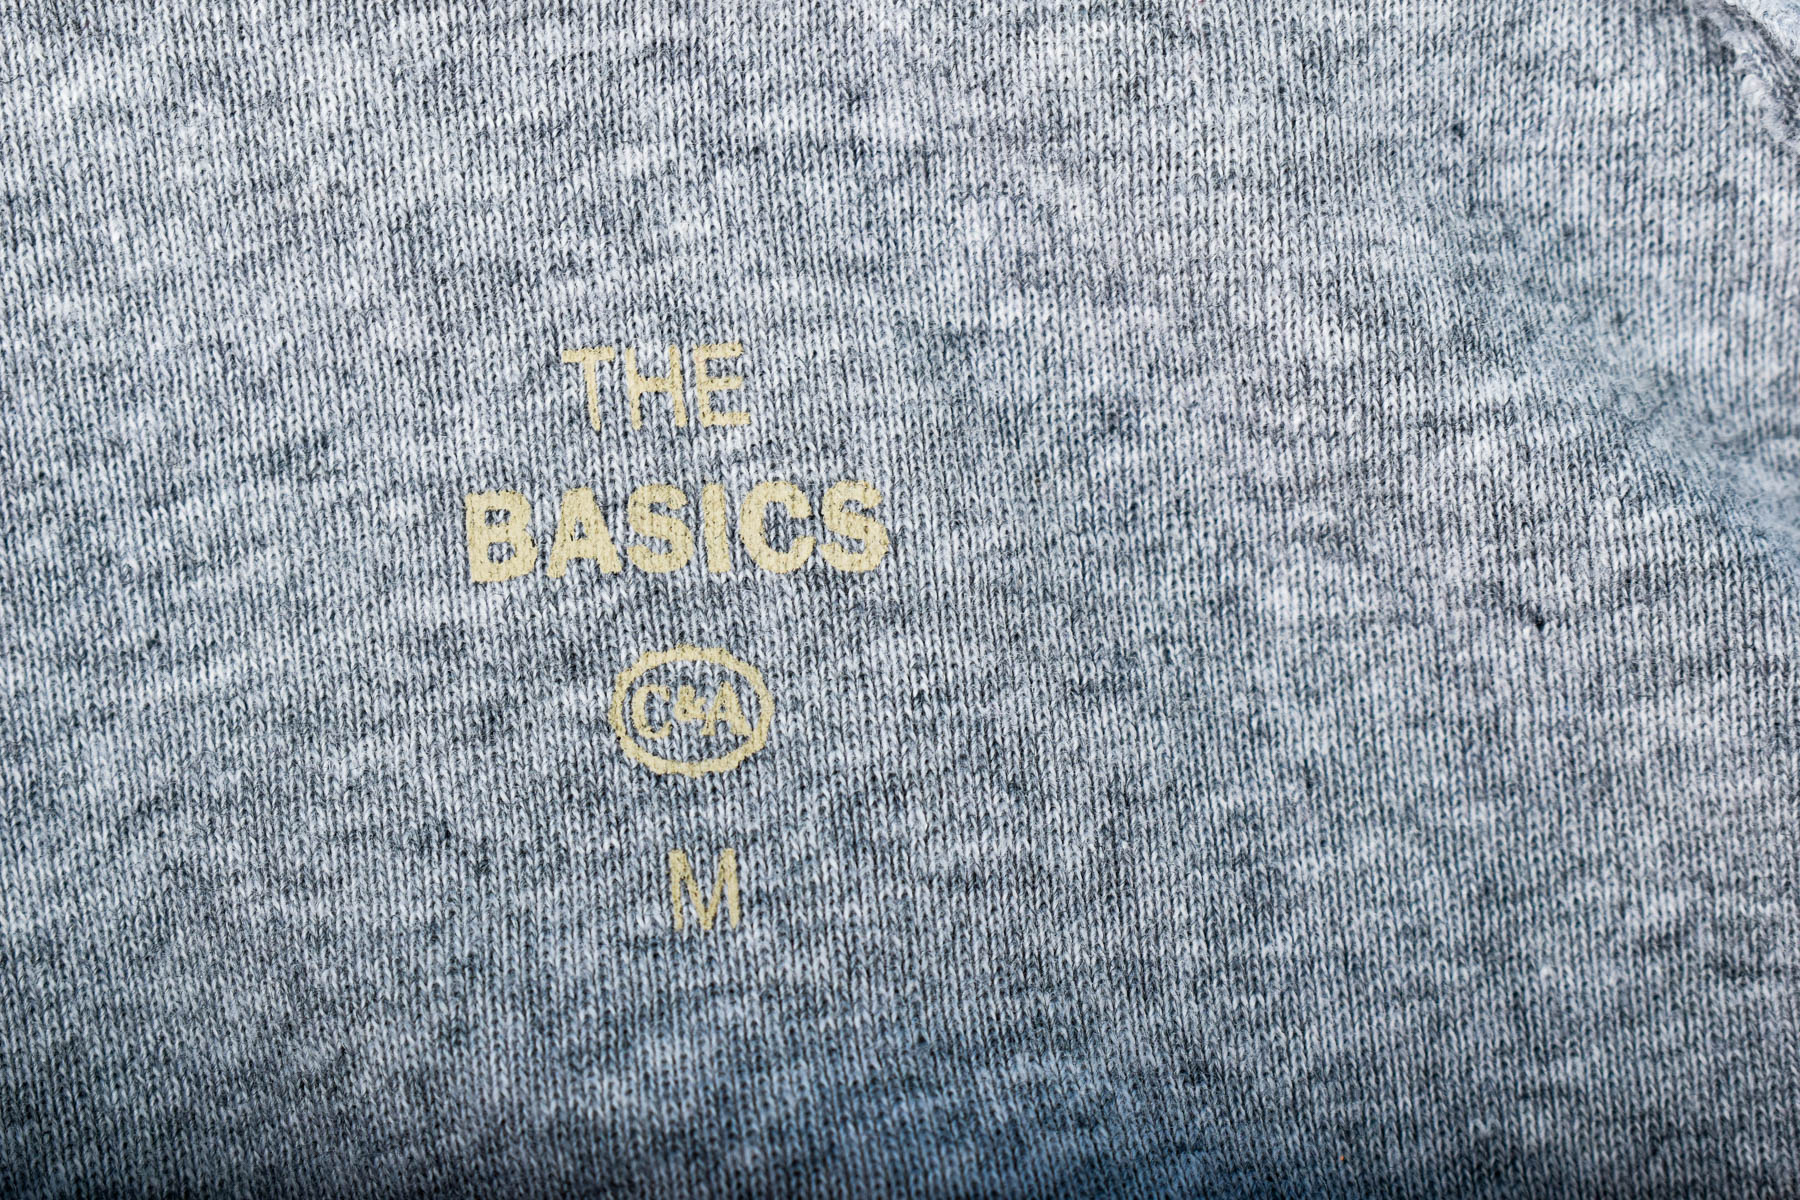 Women's t-shirt - The Basics x C&A - 2